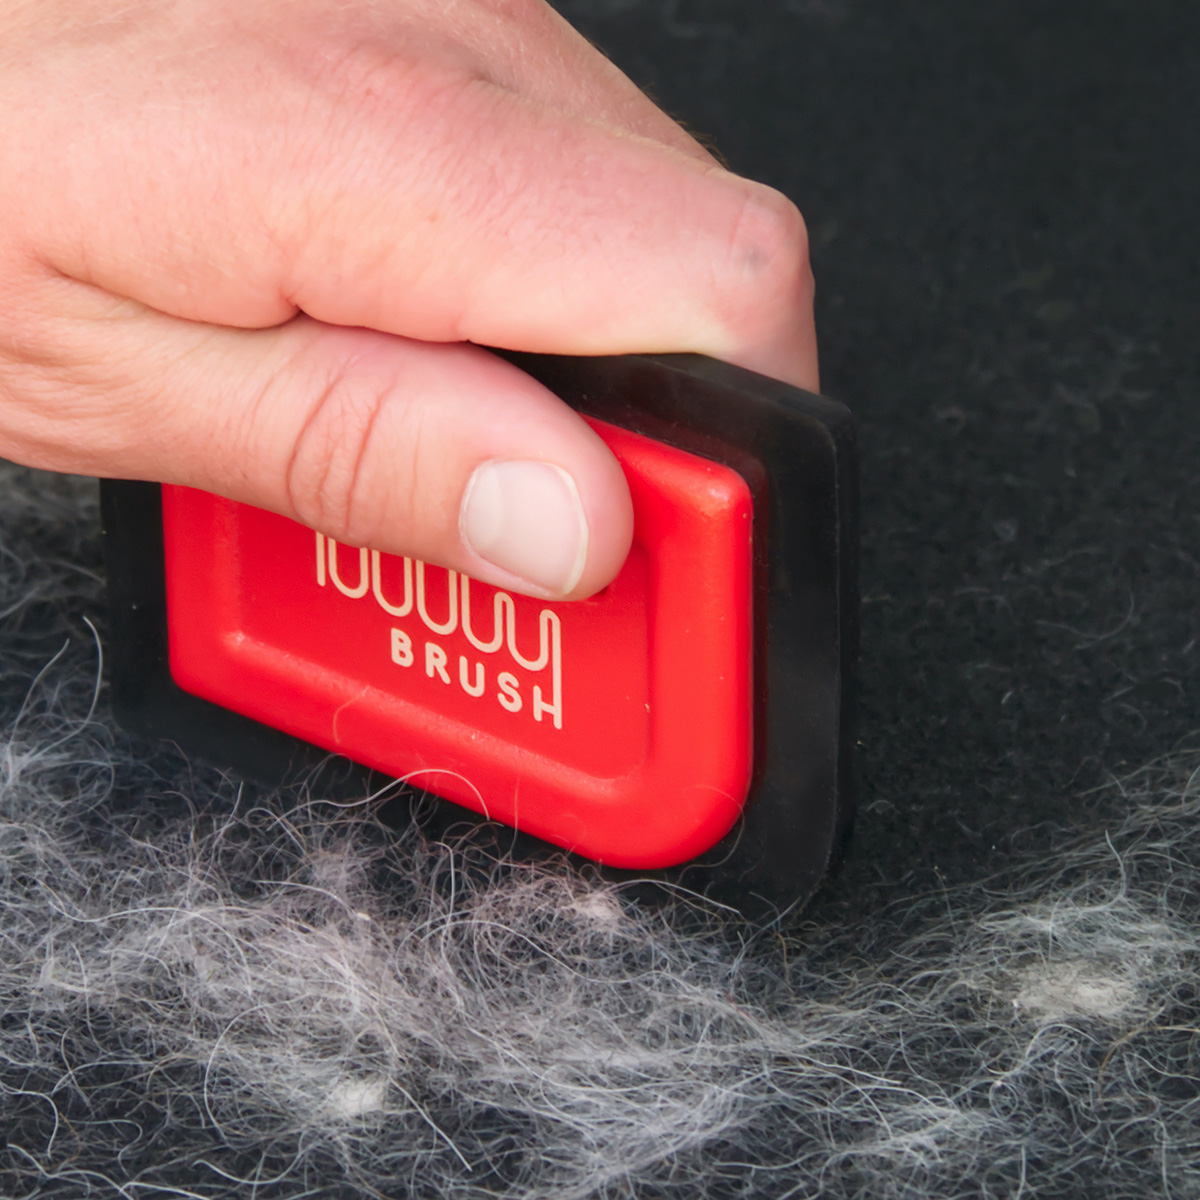  Lilly Brush Mini Pet Hair Detailer  Pet Hair Remover for Car  Carpet & Couch, Car Interior & Auto Detailing Supplies, Dog & Cat Hair  Remover for Car & Furniture, Reusable